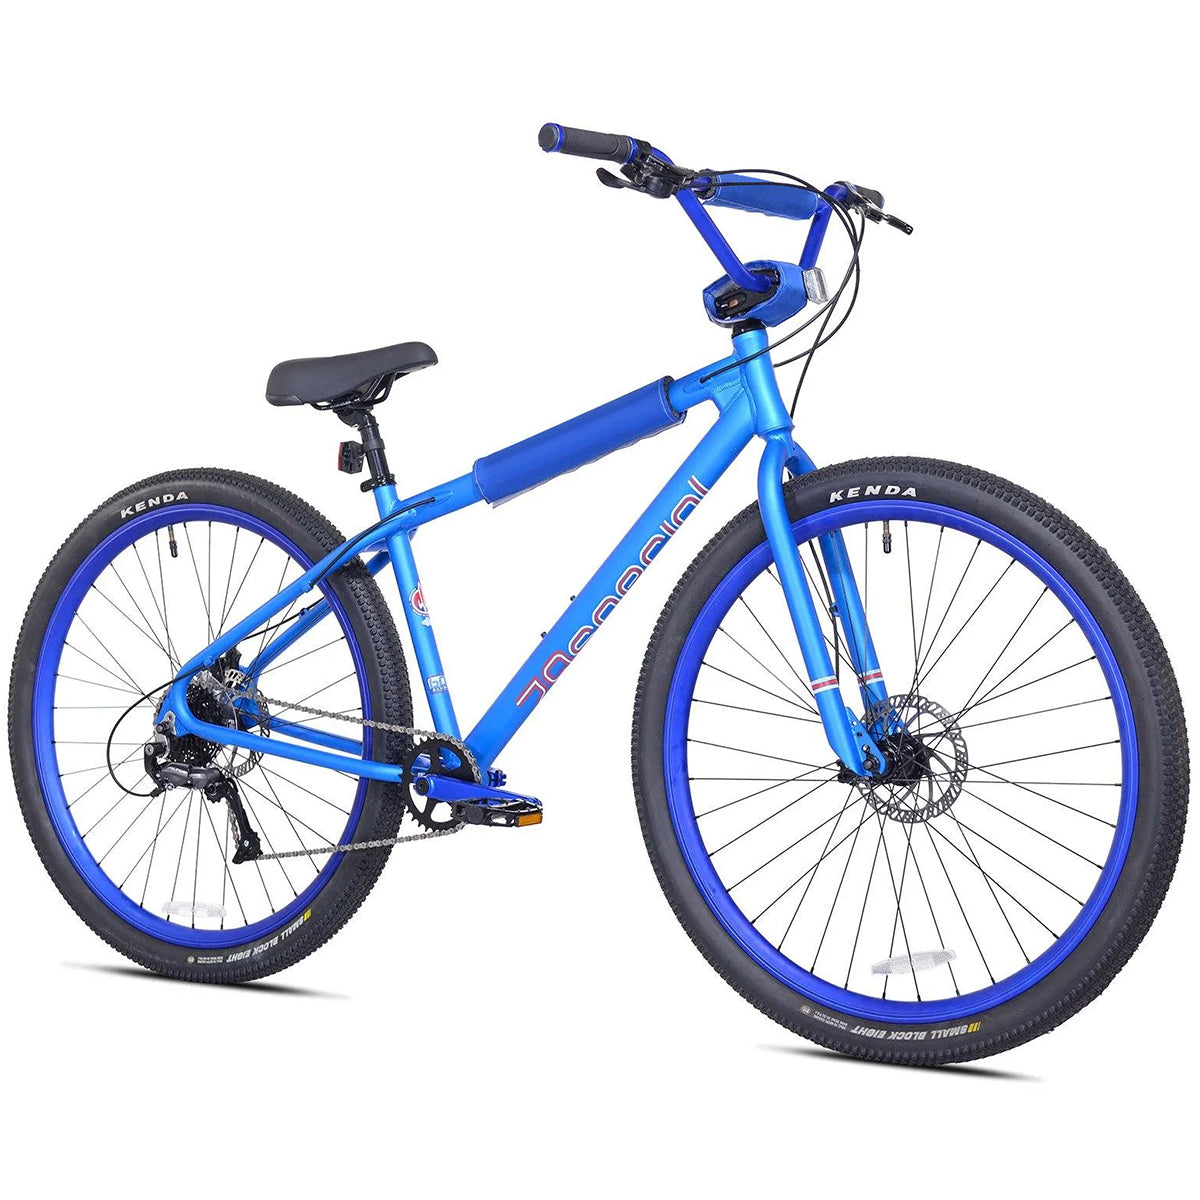 All-Rounder Multi-Speed Cruiser BMX Bike 29" Blue